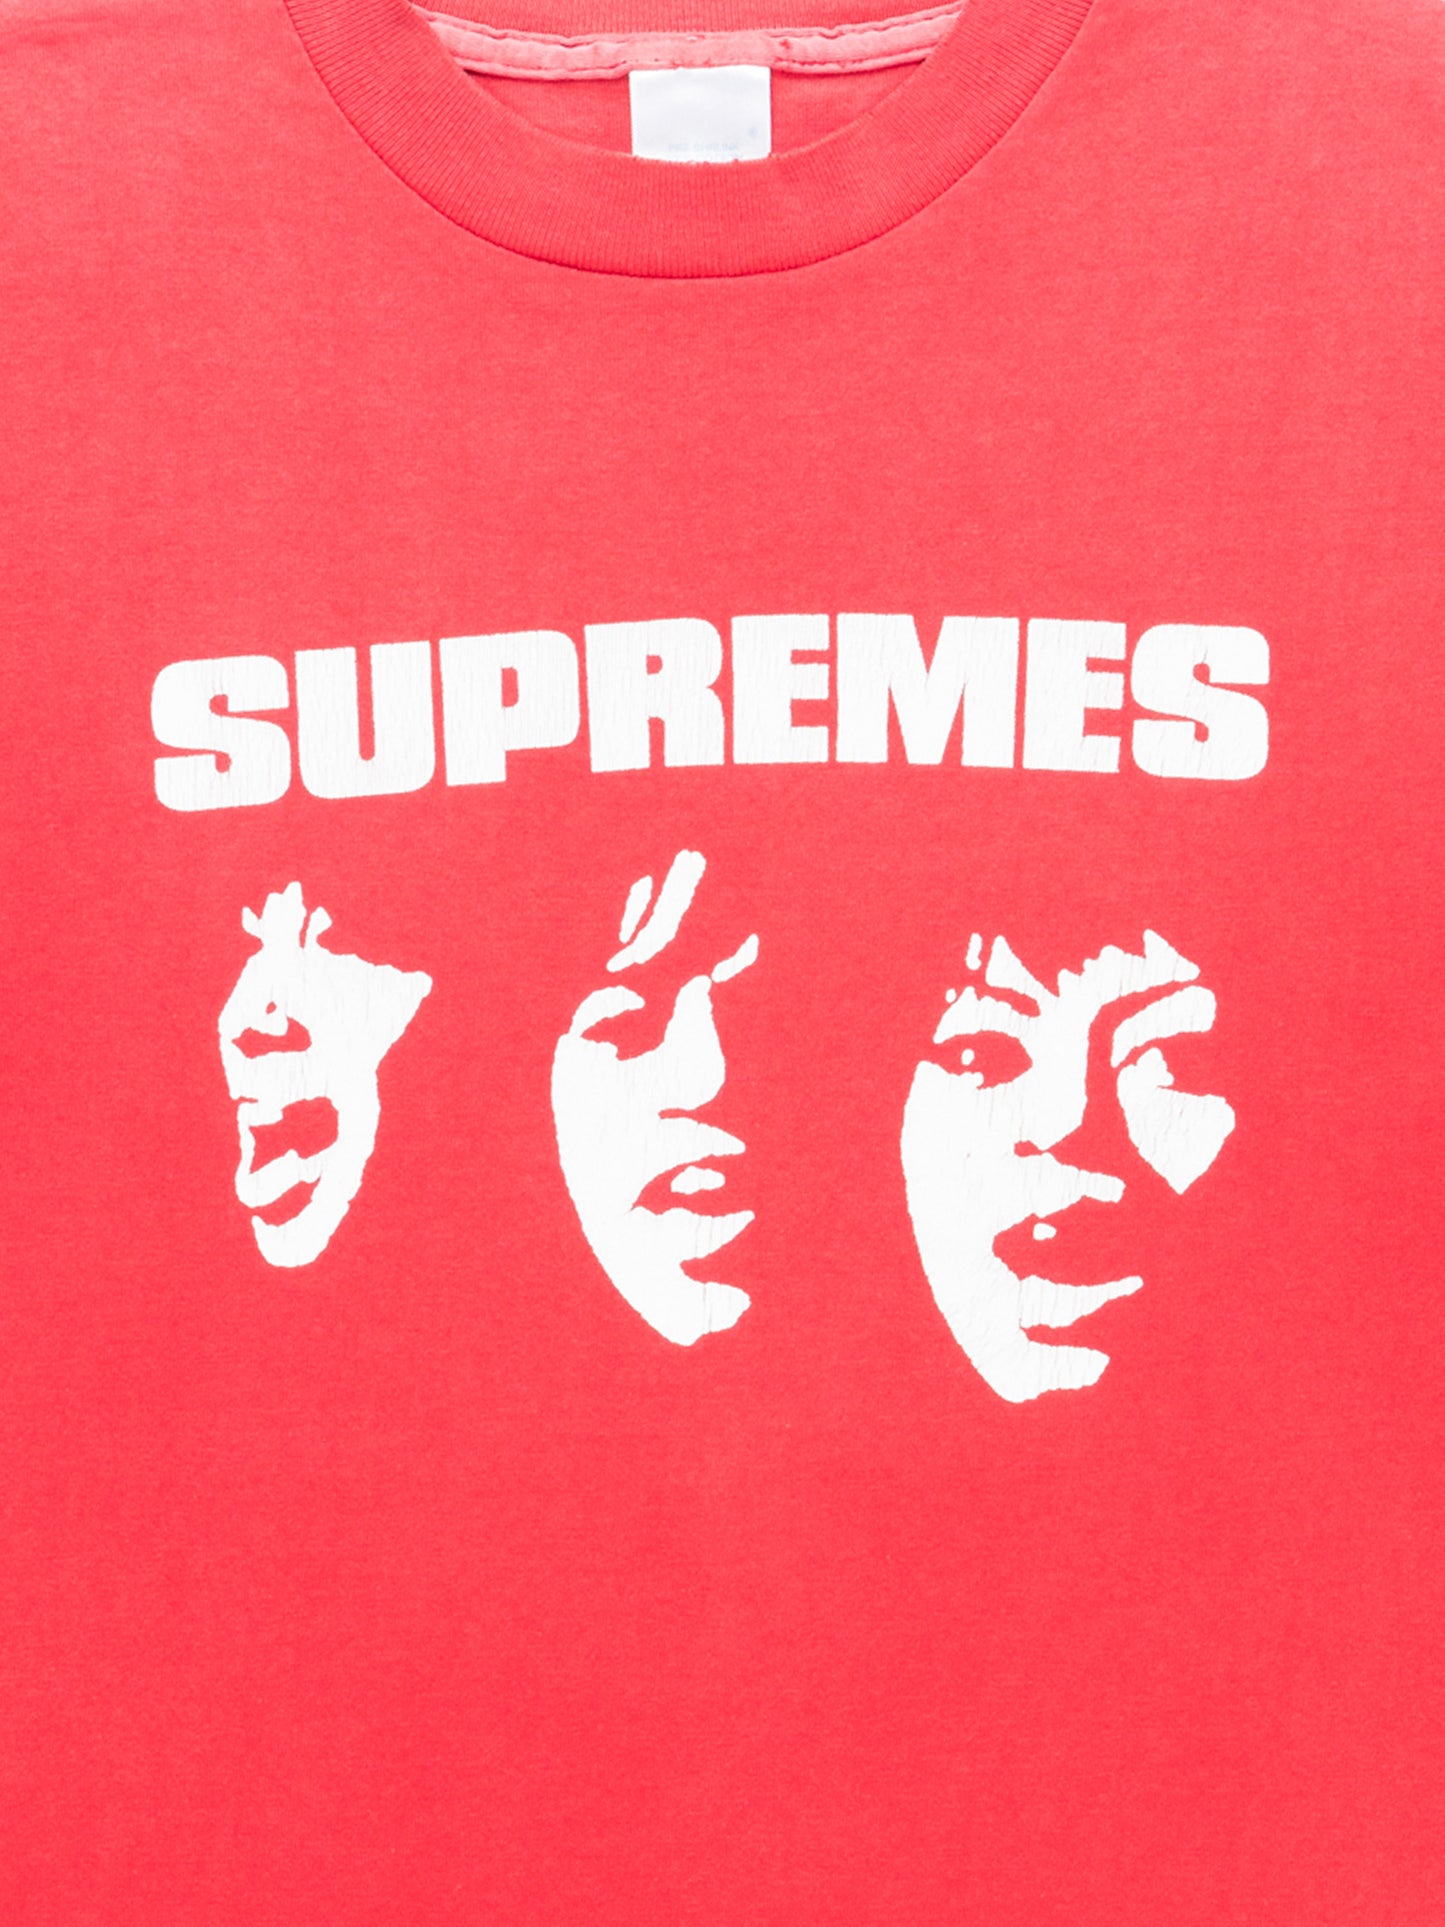 'The Supremes' T-Shirt